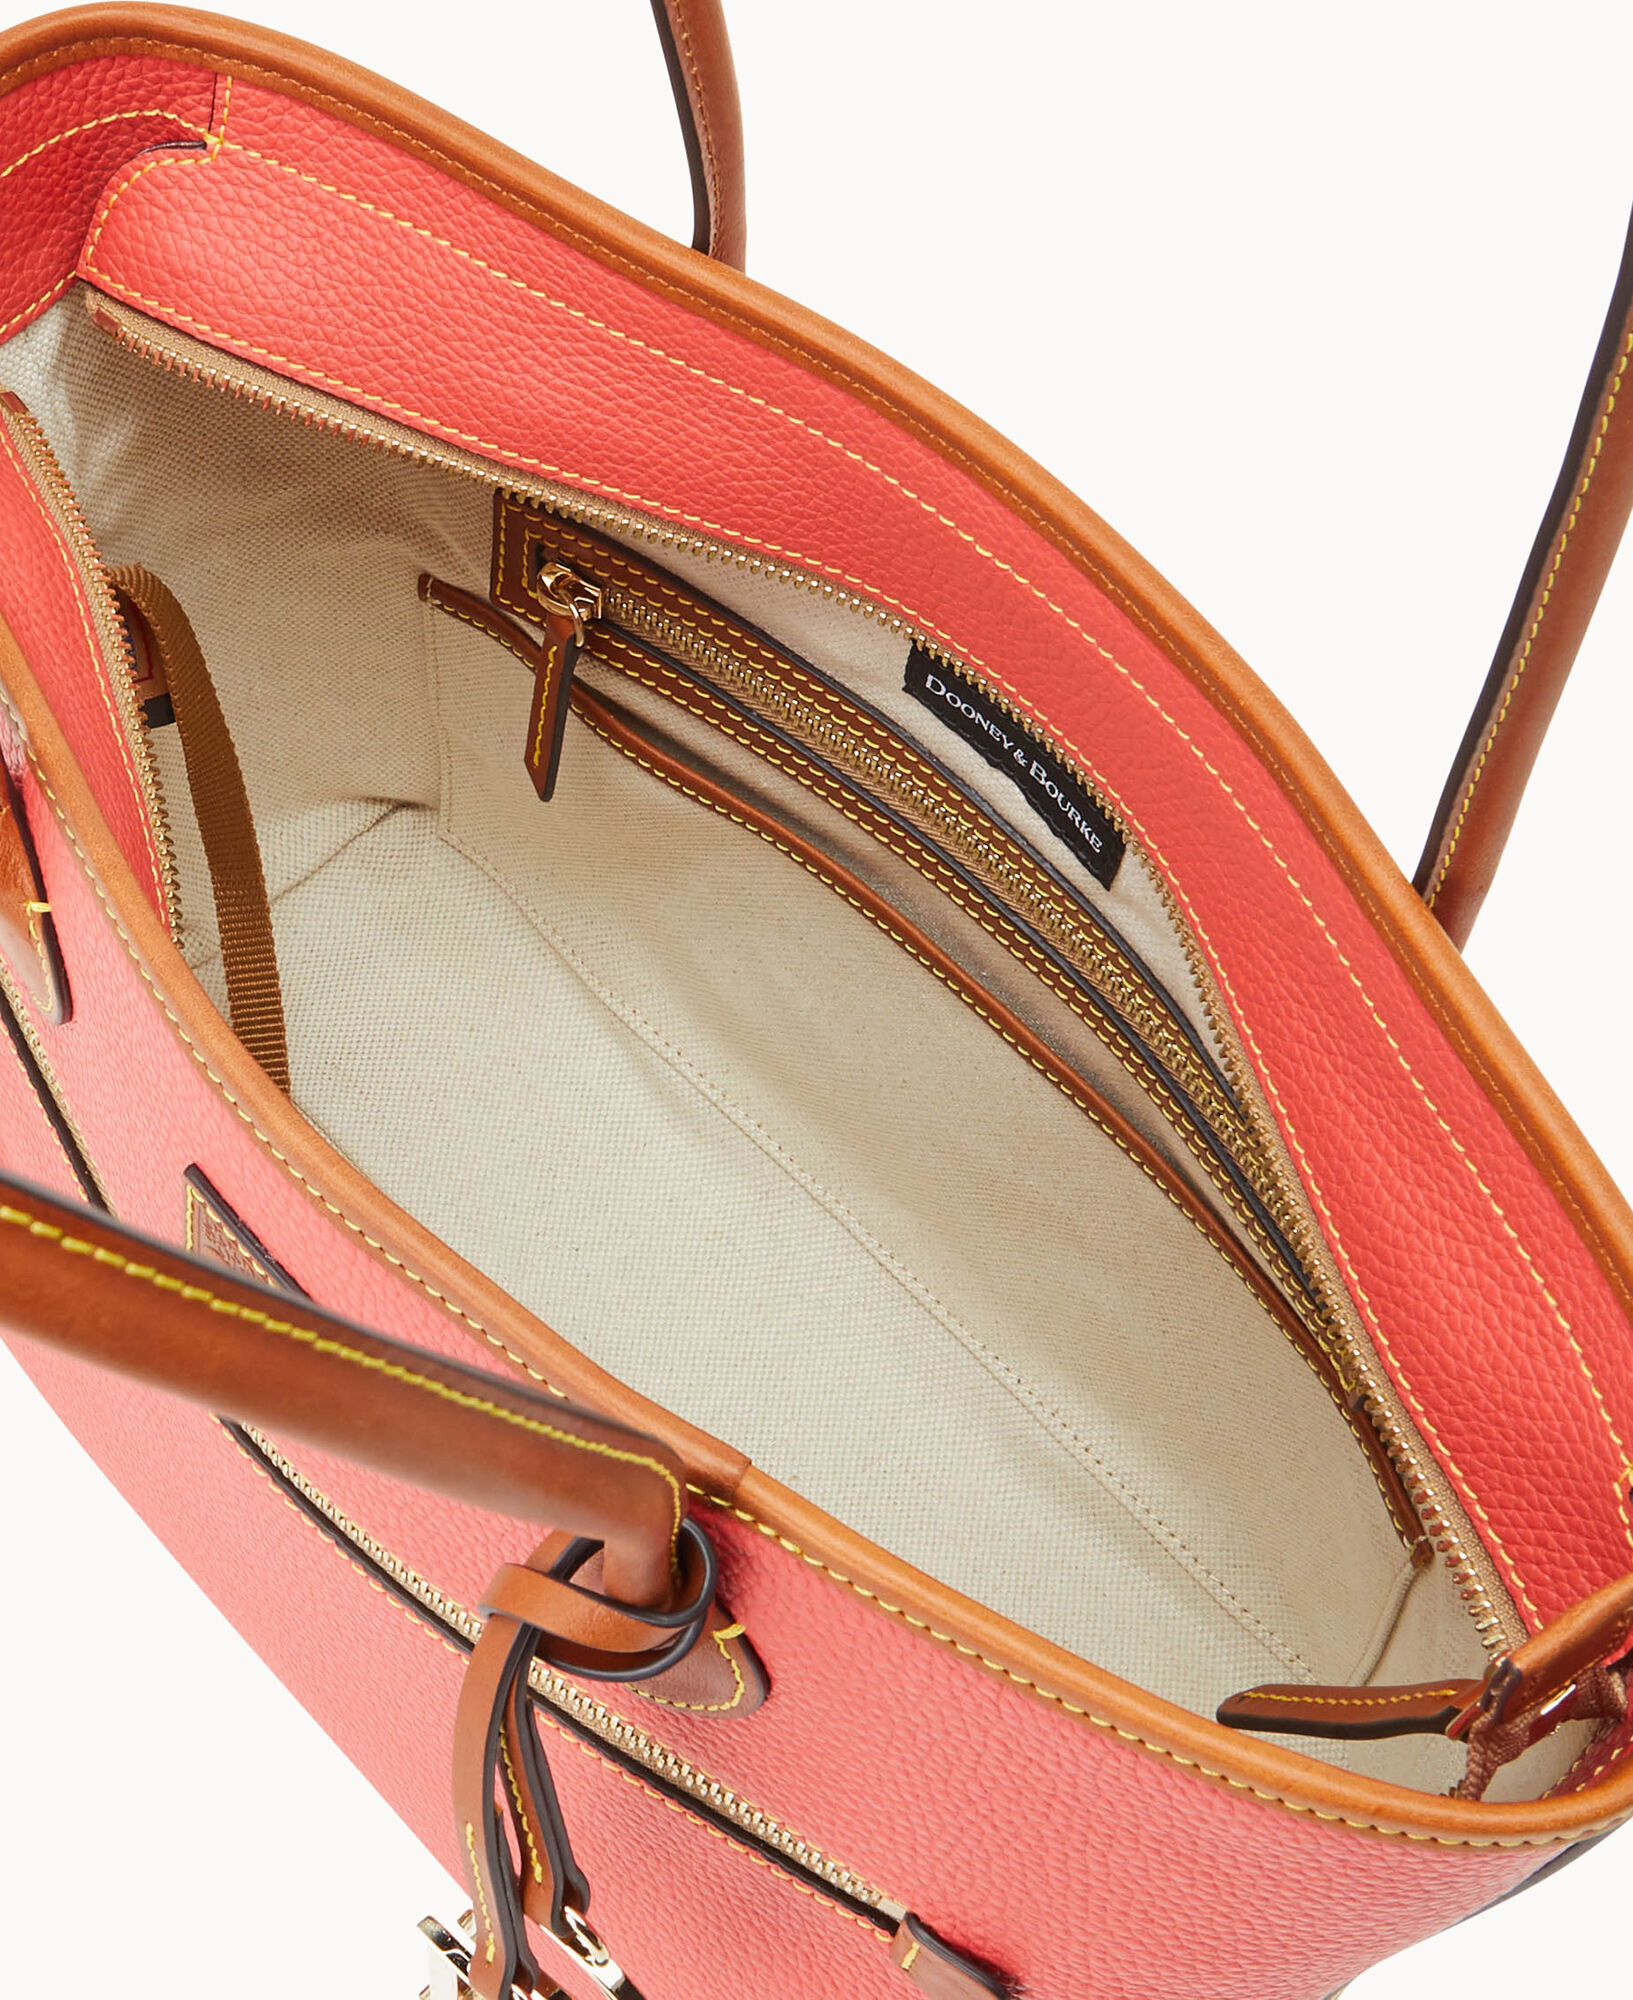 Dooney Bourke Pink Pebble All Weather Leather Handbag Dual Strap Top Zipper